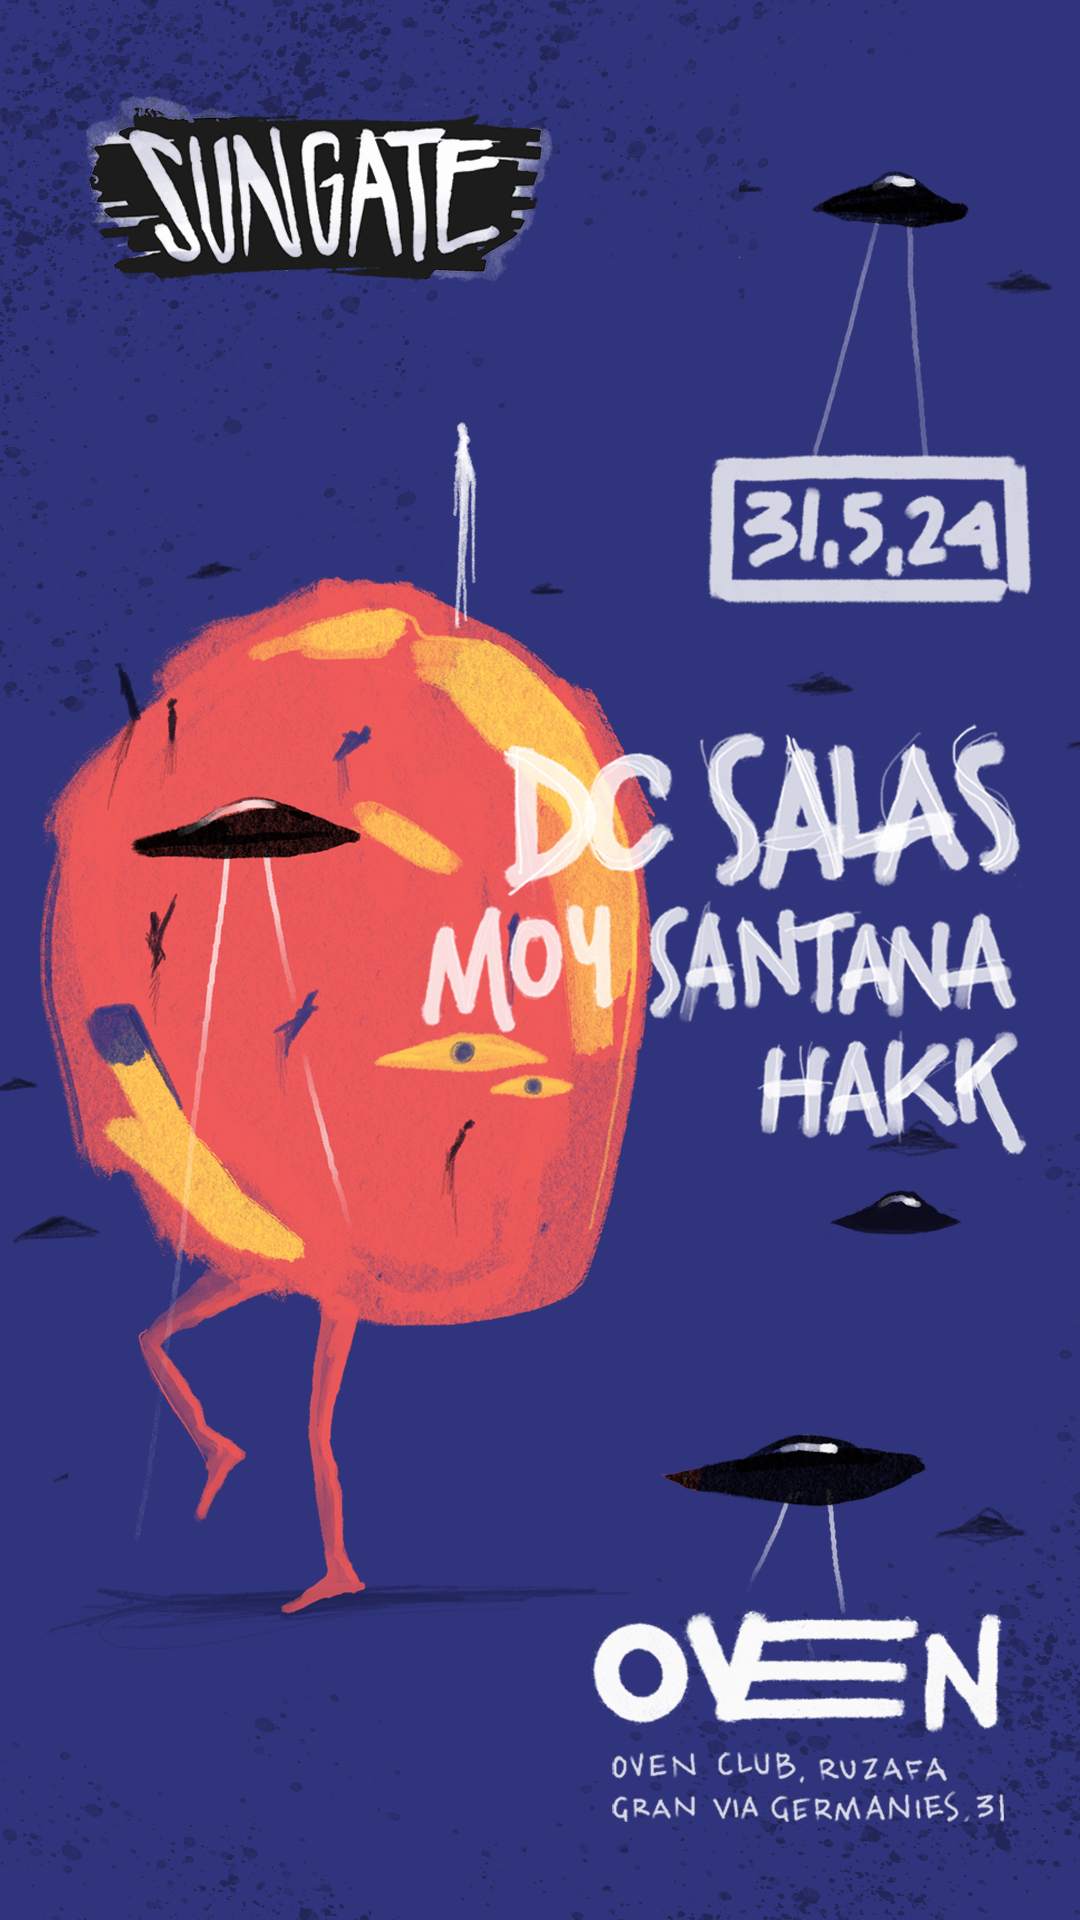 Sungate Night: DC Salas + Moy Santana + Hakk / Bar: Rafa Molina - フライヤー表